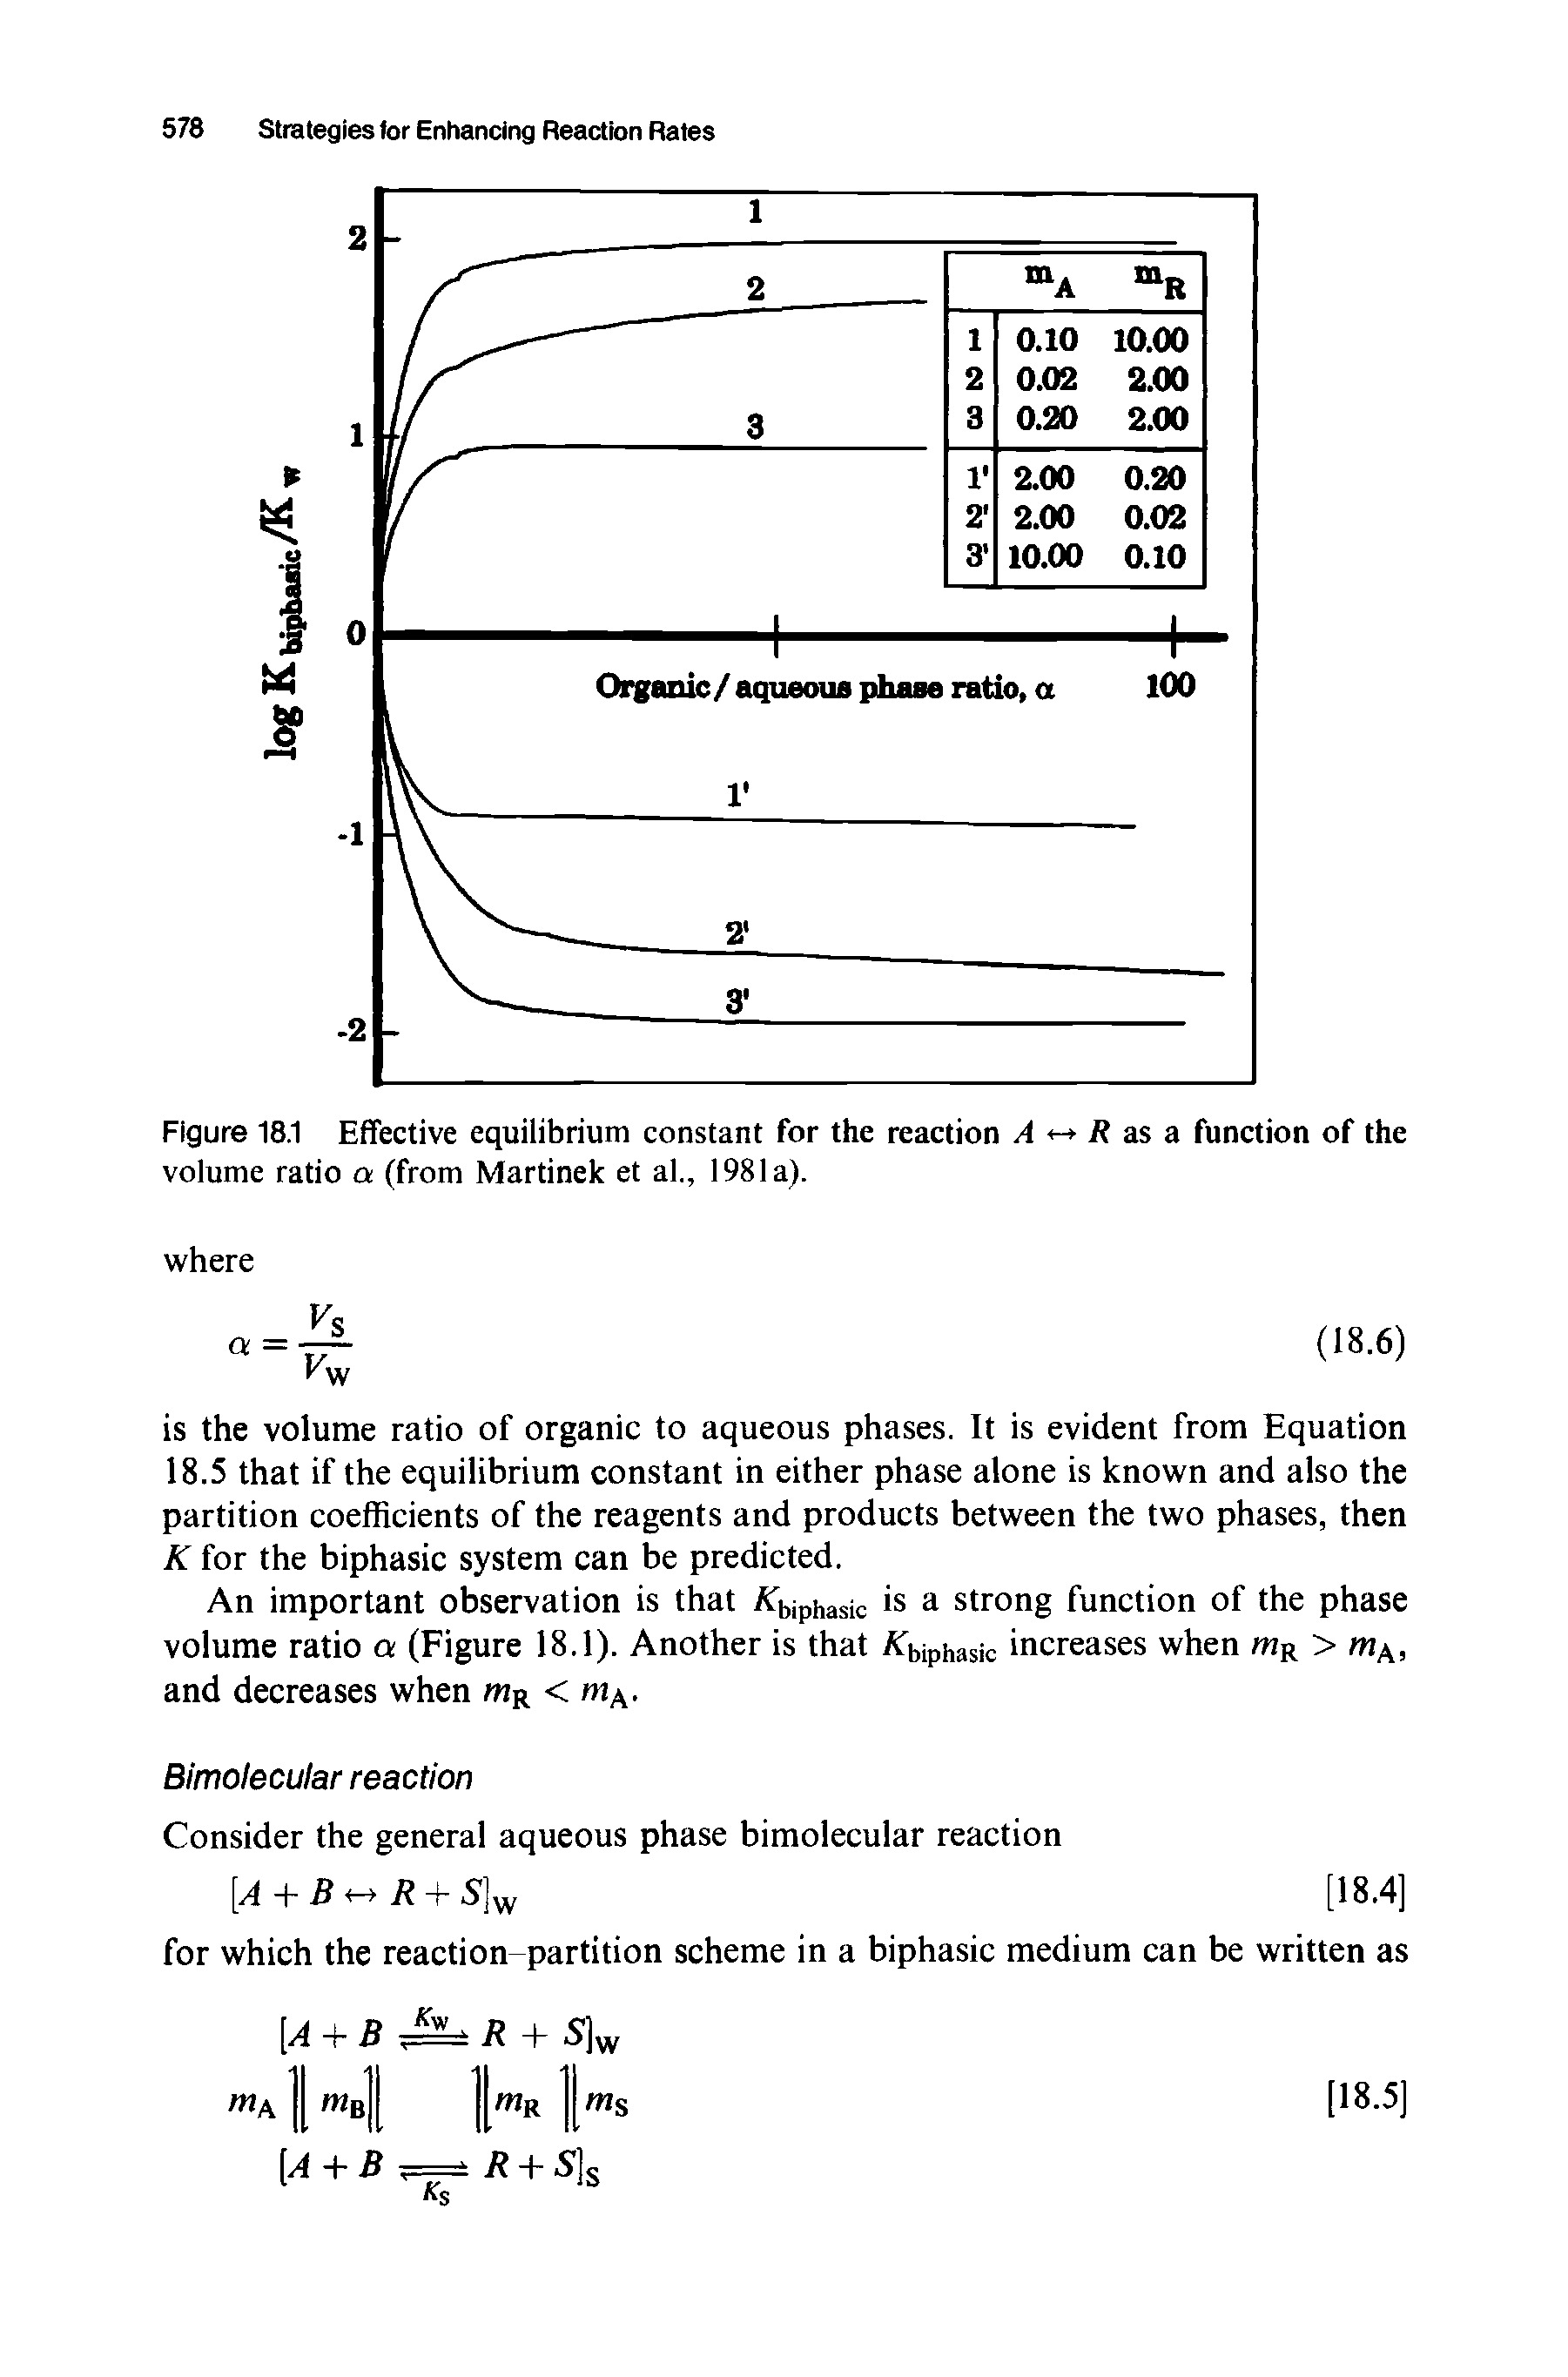 Figure 18.1 Effective equilibrium constant for the reaction A volume ratio a (from Martinek et al., 1981a).